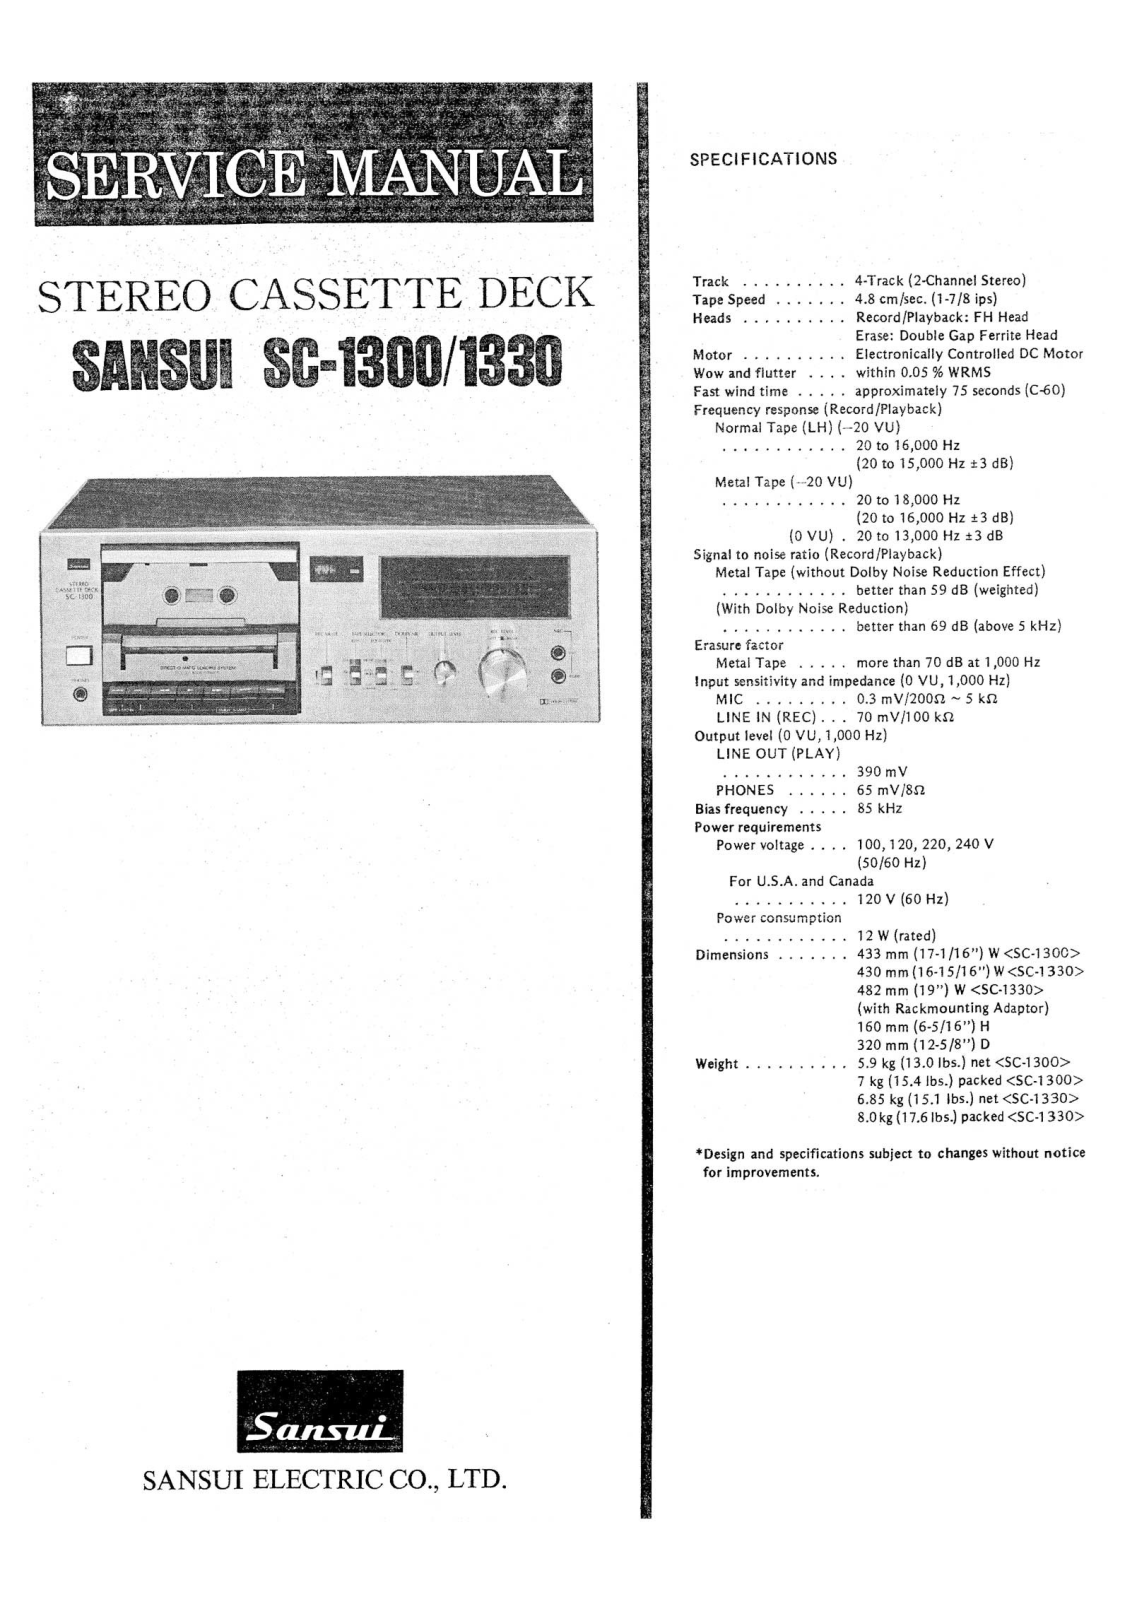 Sansui SC-1330, SC-1300 Service Manual